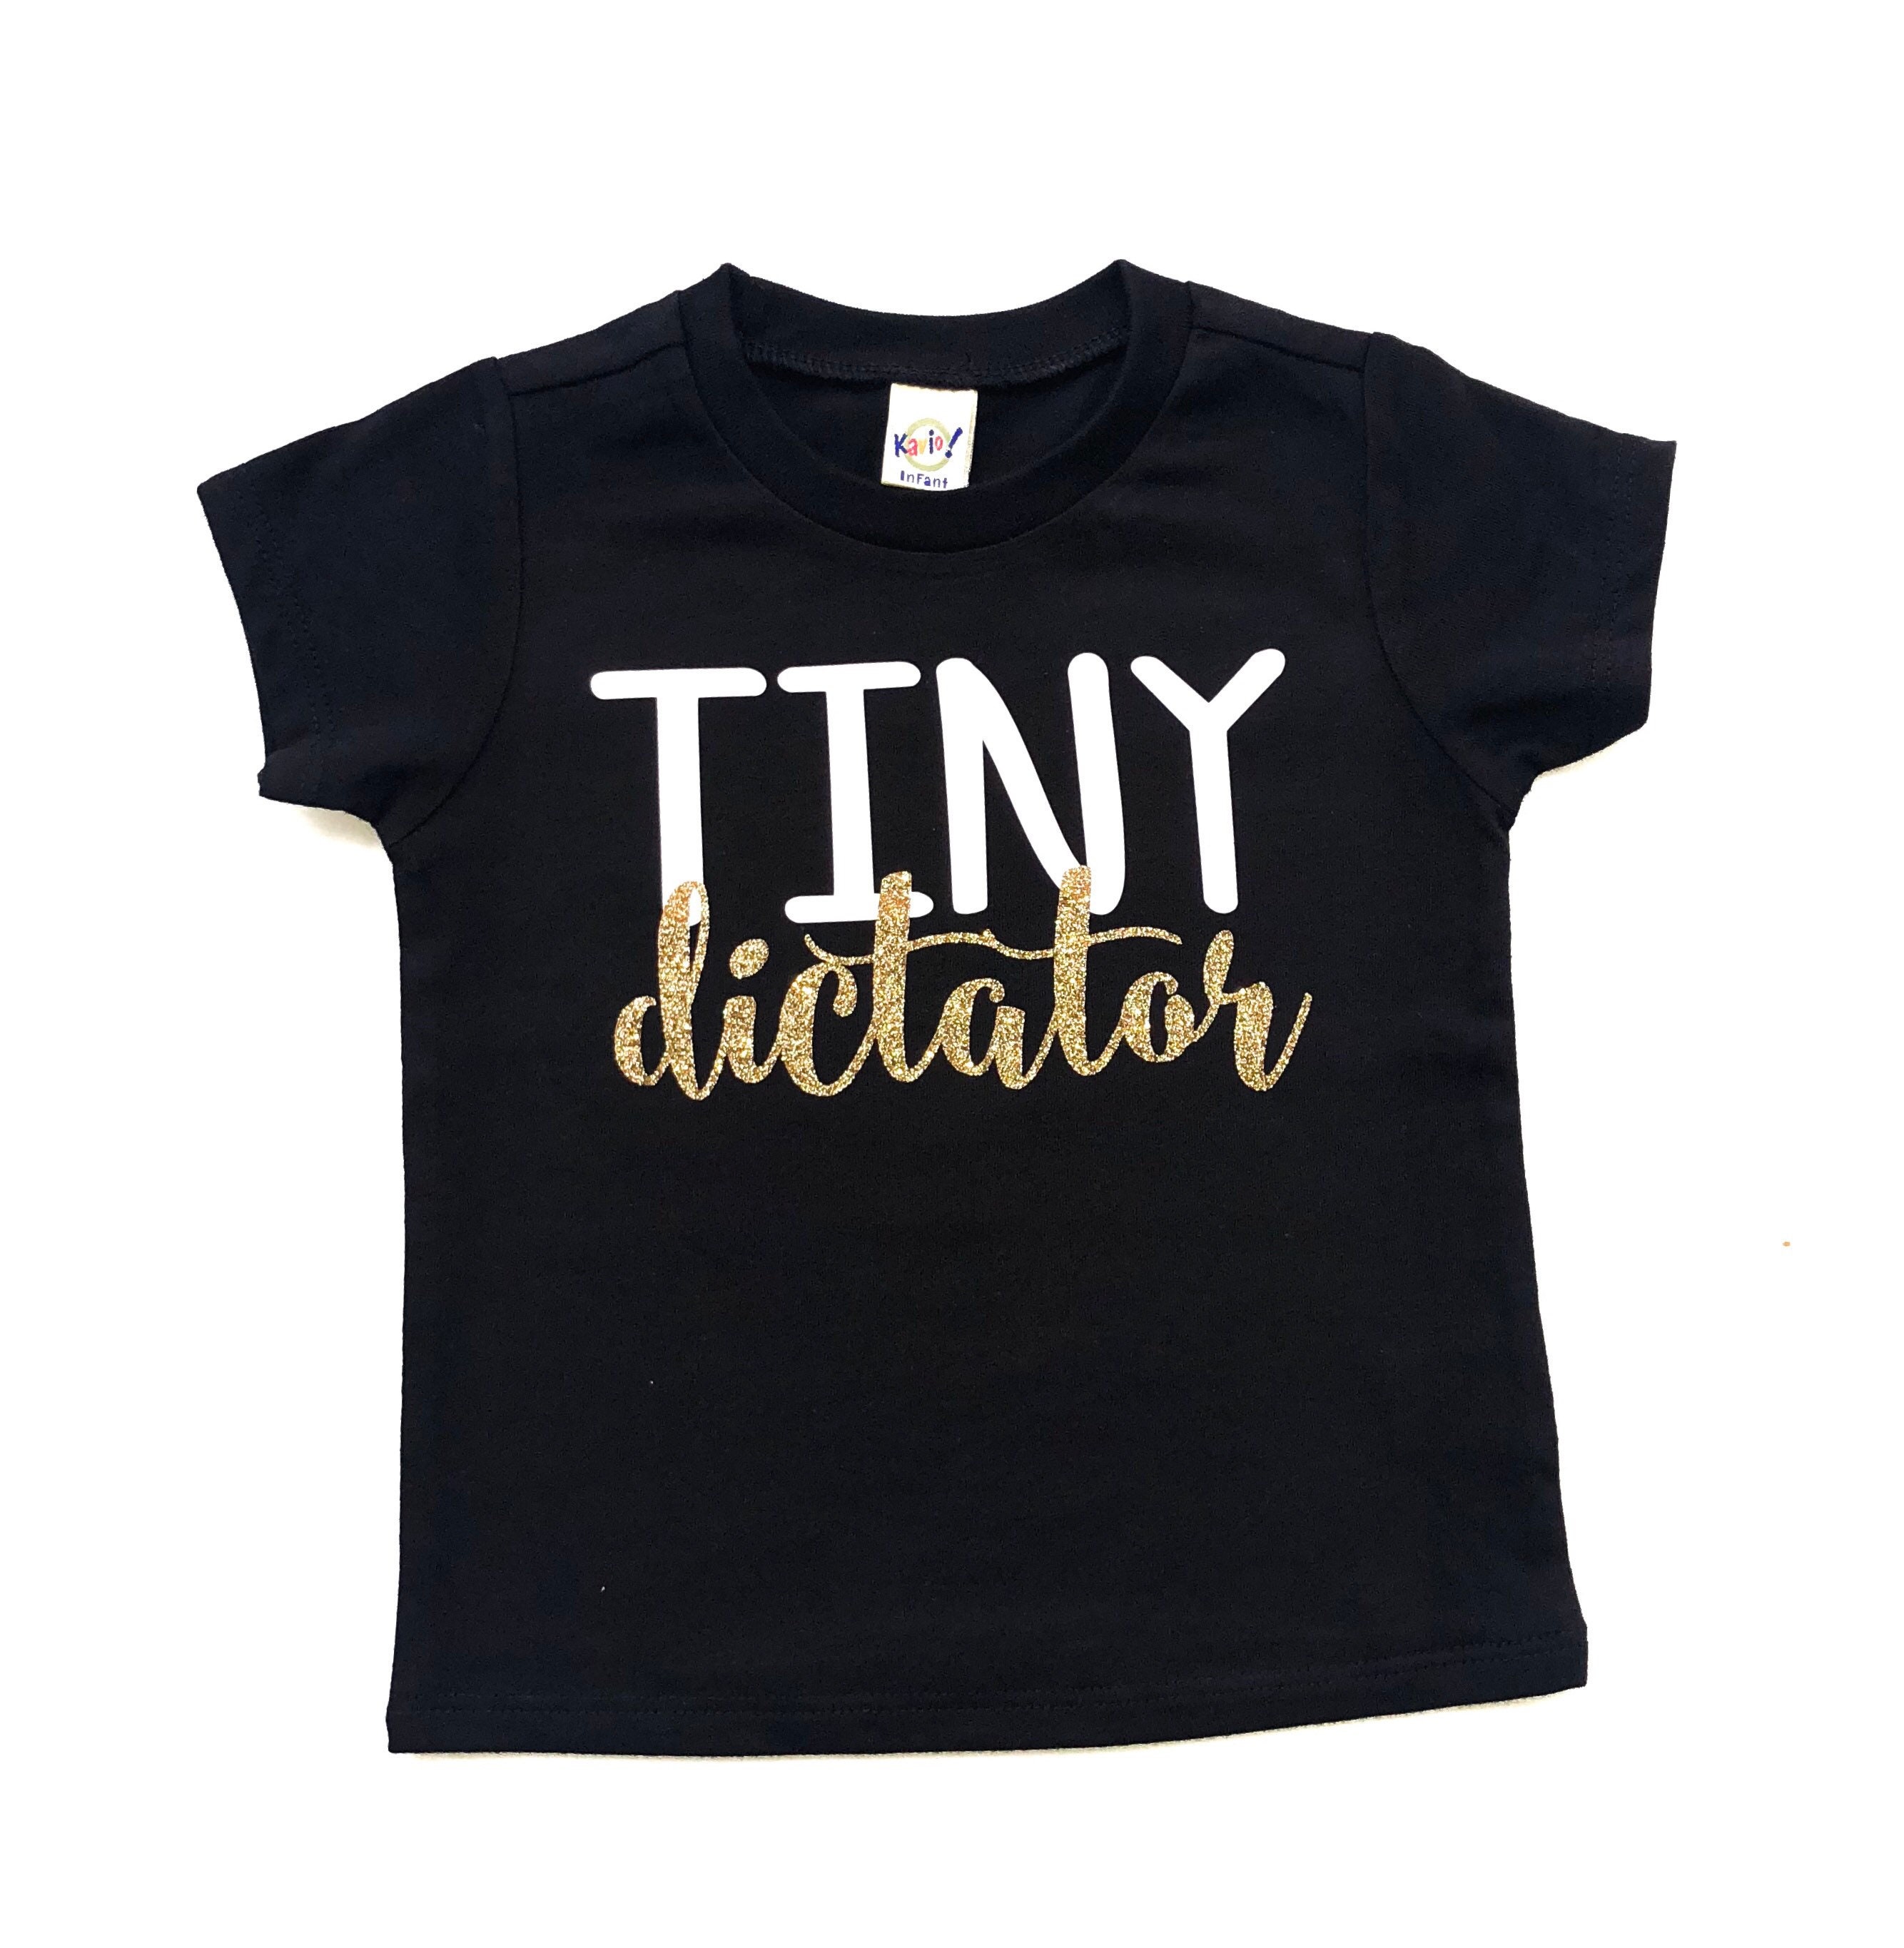 Tiny Dictator Toddler Shirt Bossy Shirt Bossy Toddler - Etsy